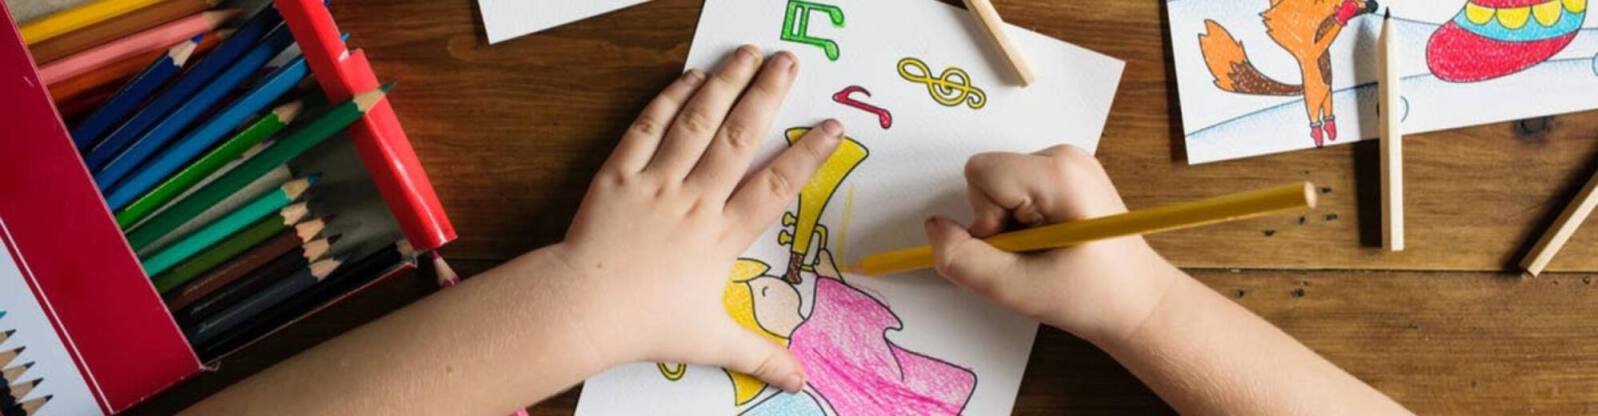 Child Care Provider Resume: Example, Skills, & Writing Tips